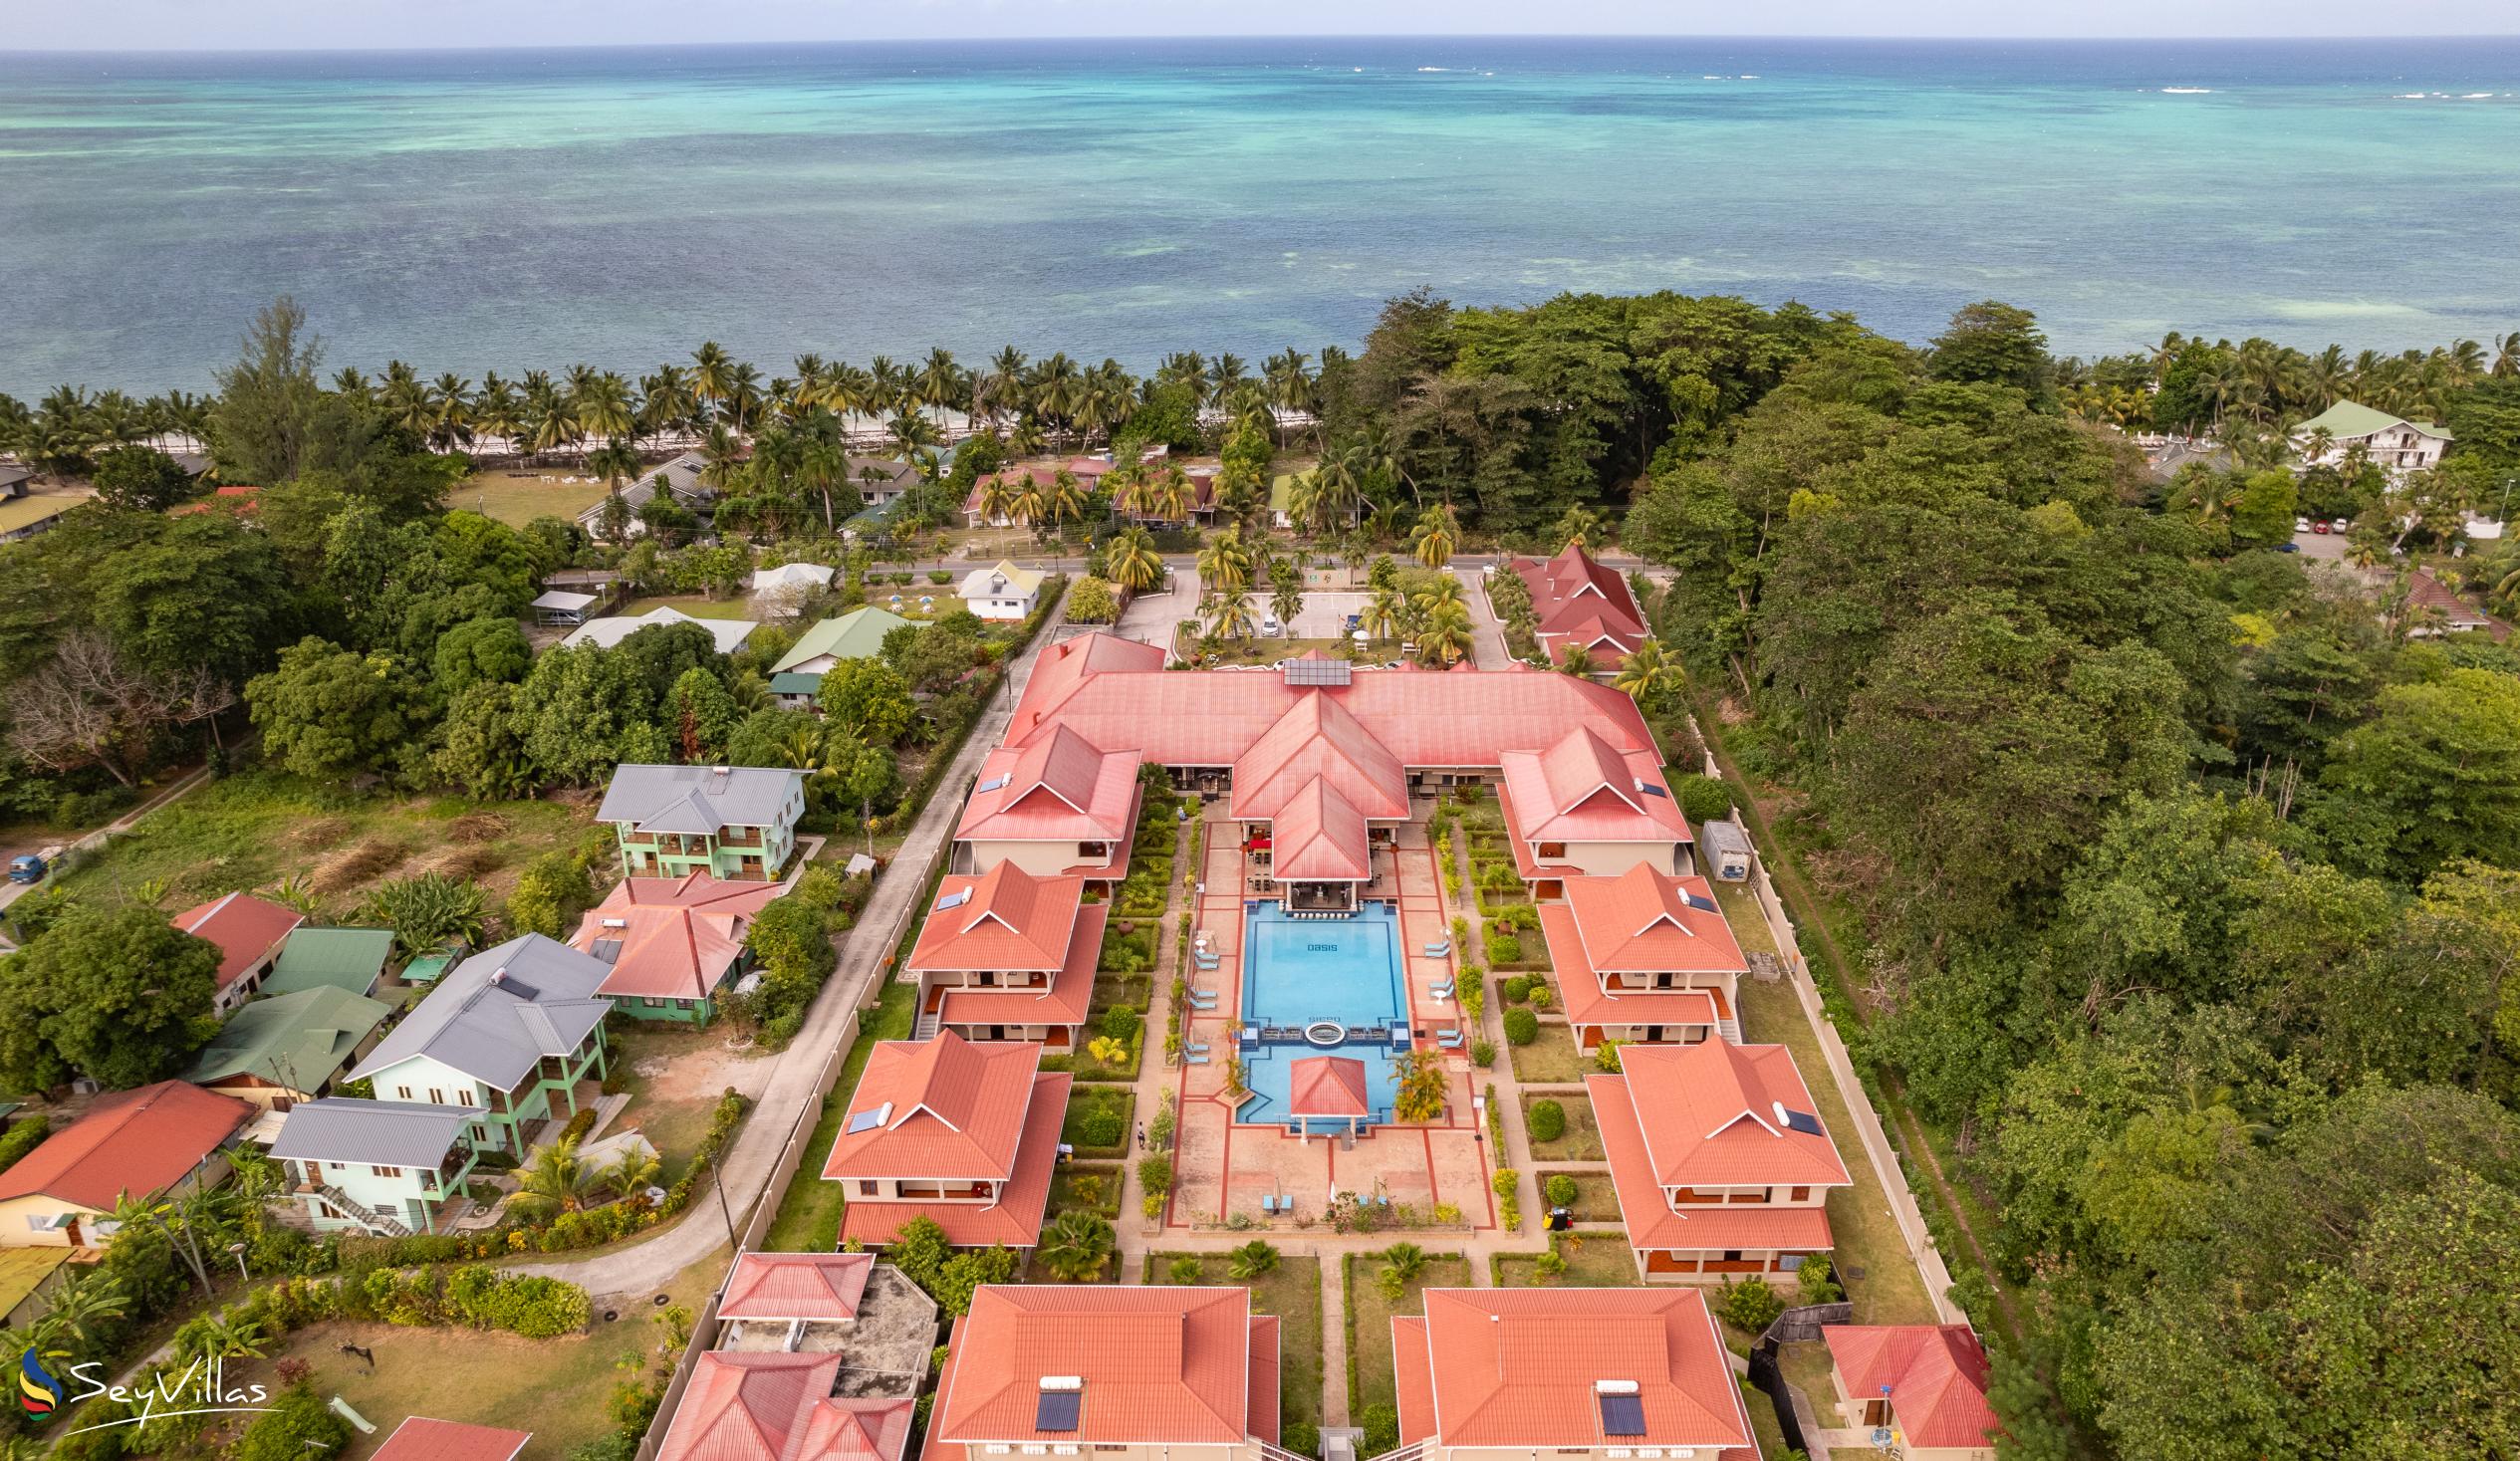 Photo 2: Oasis Hotel, Restaurant & Spa - Outdoor area - Praslin (Seychelles)